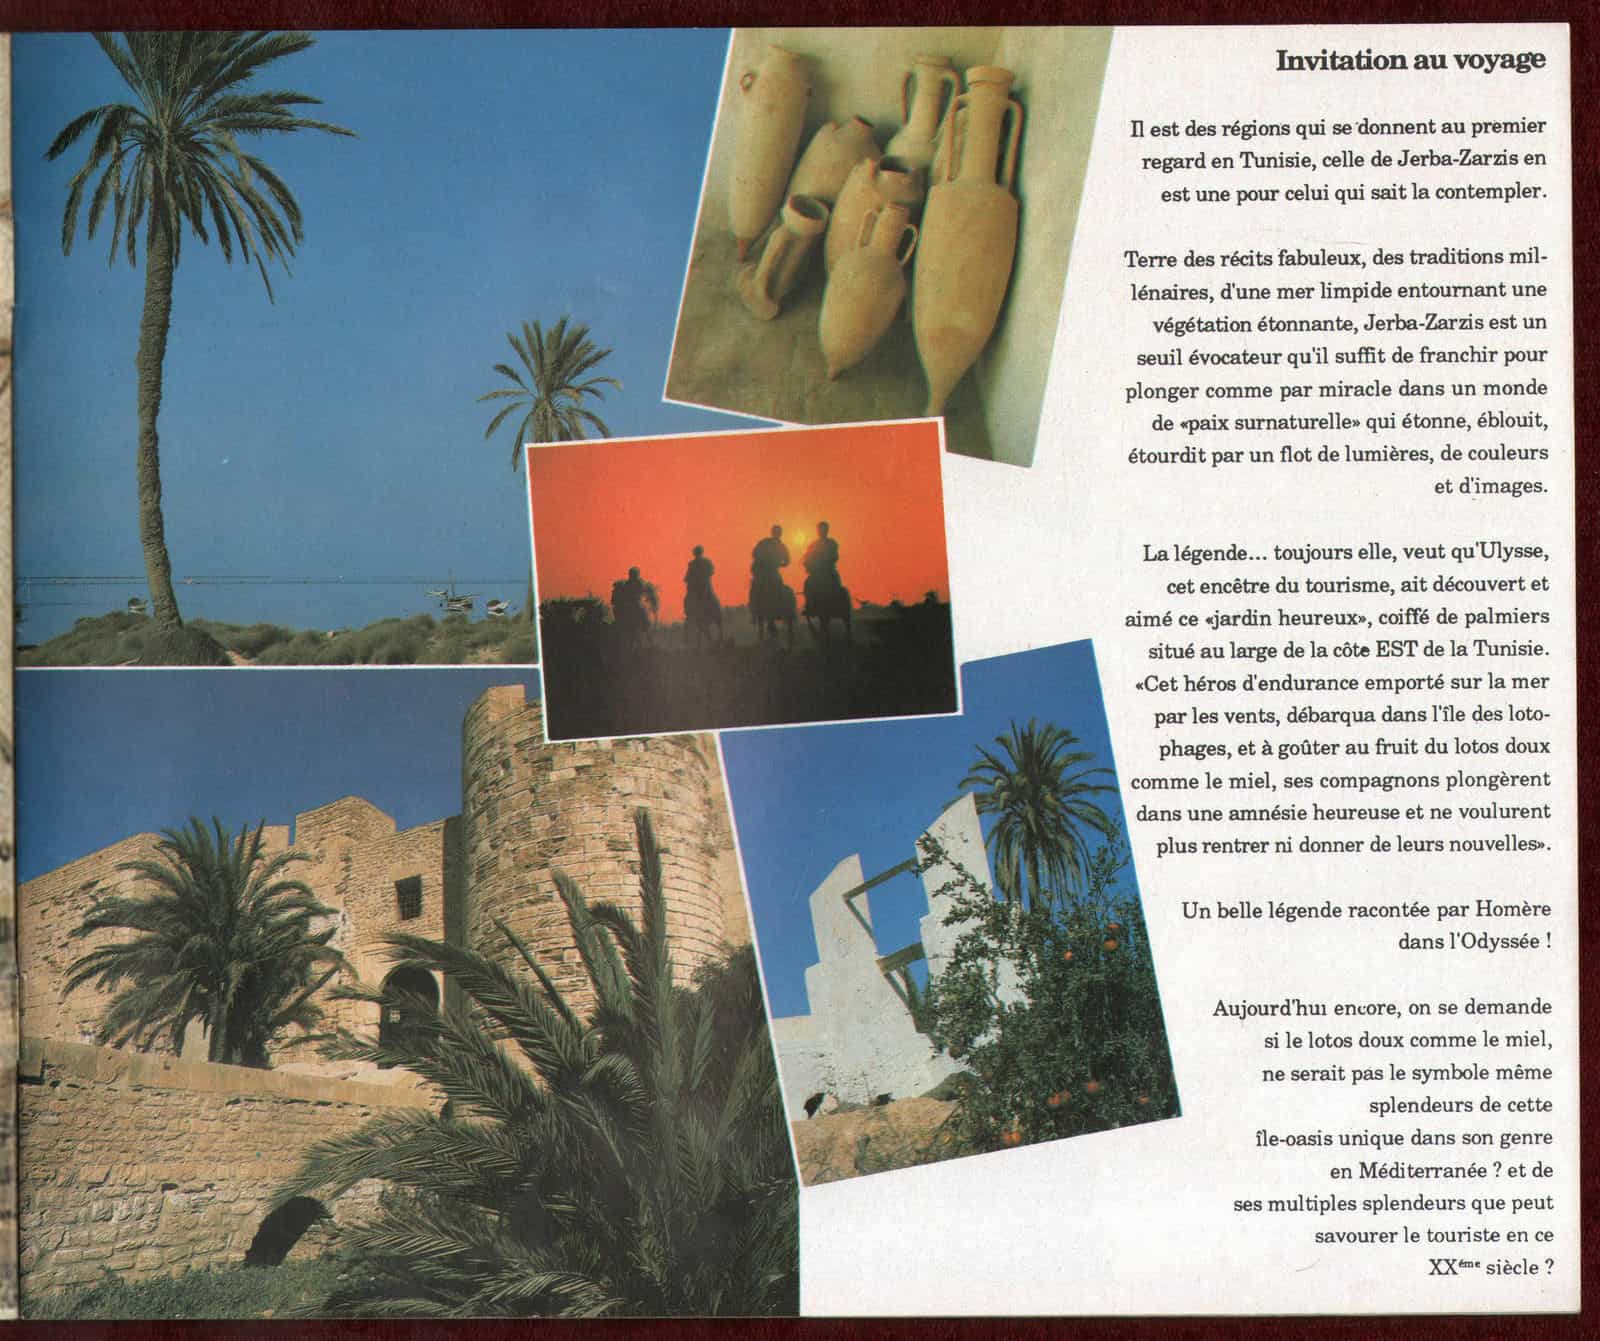 travel books on tunisia